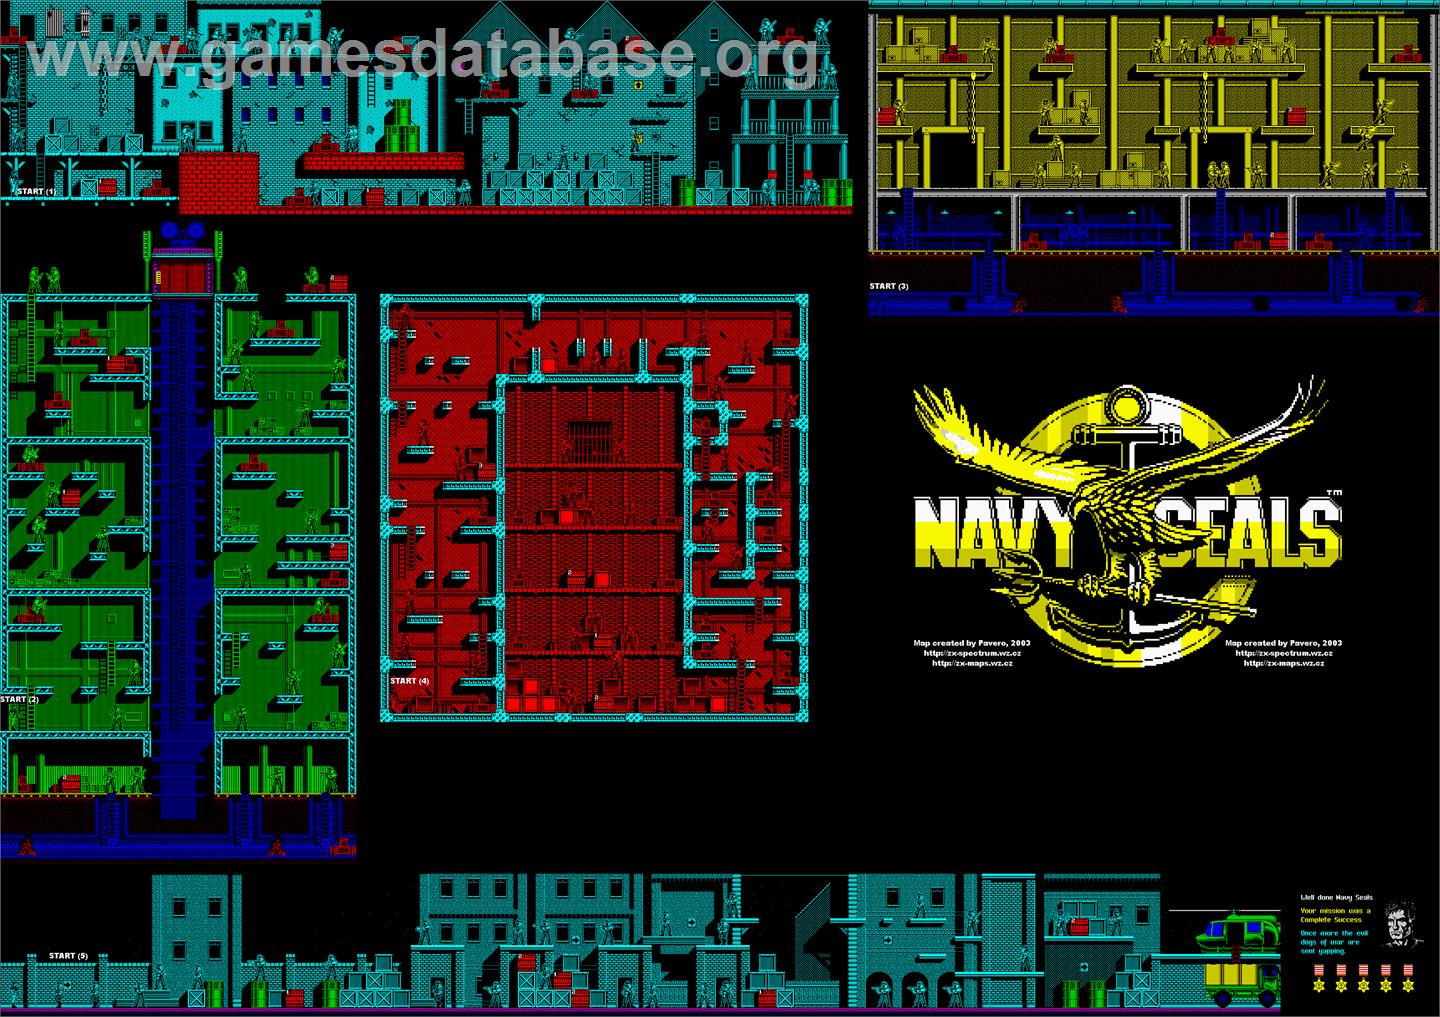 Navy Seals - Amstrad GX4000 - Artwork - Map